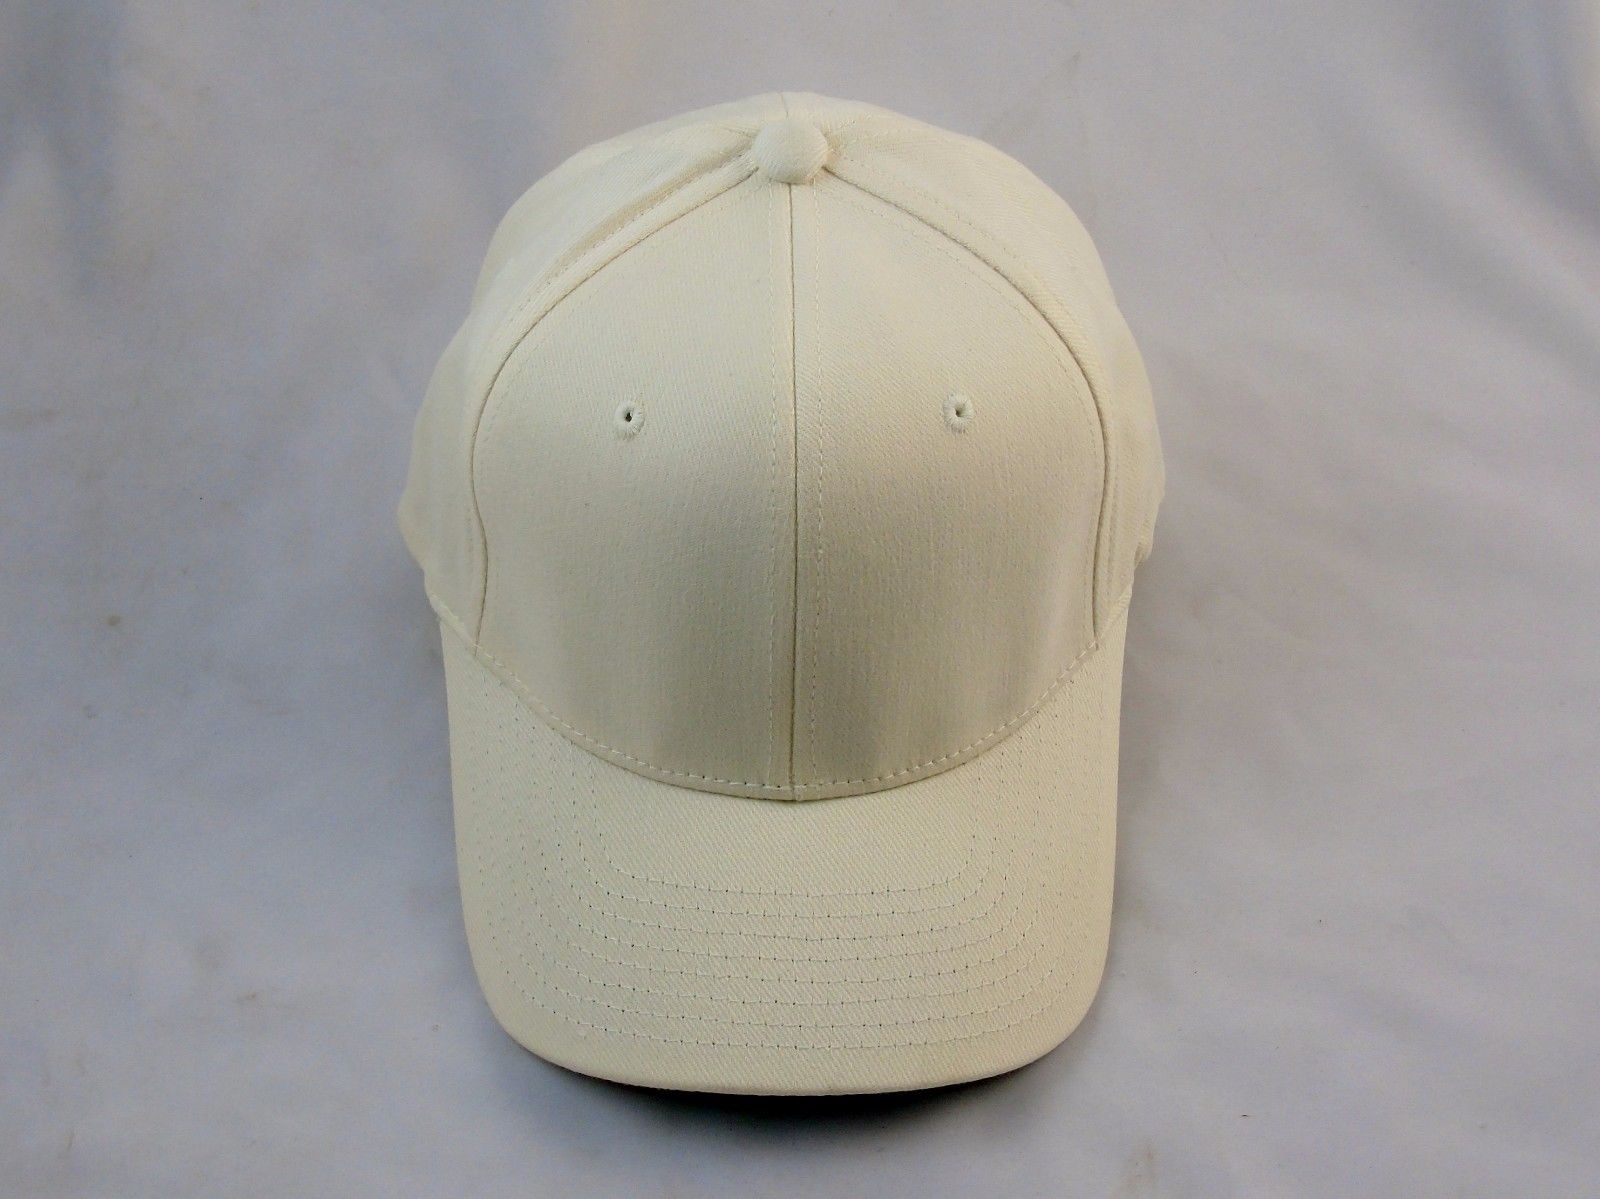 Ball Cap Hat Brushed Twill 6-Panel #6377, Elastic Headband, Natural Cream Color - Natural (Cream) - S/M (Small-Medium)